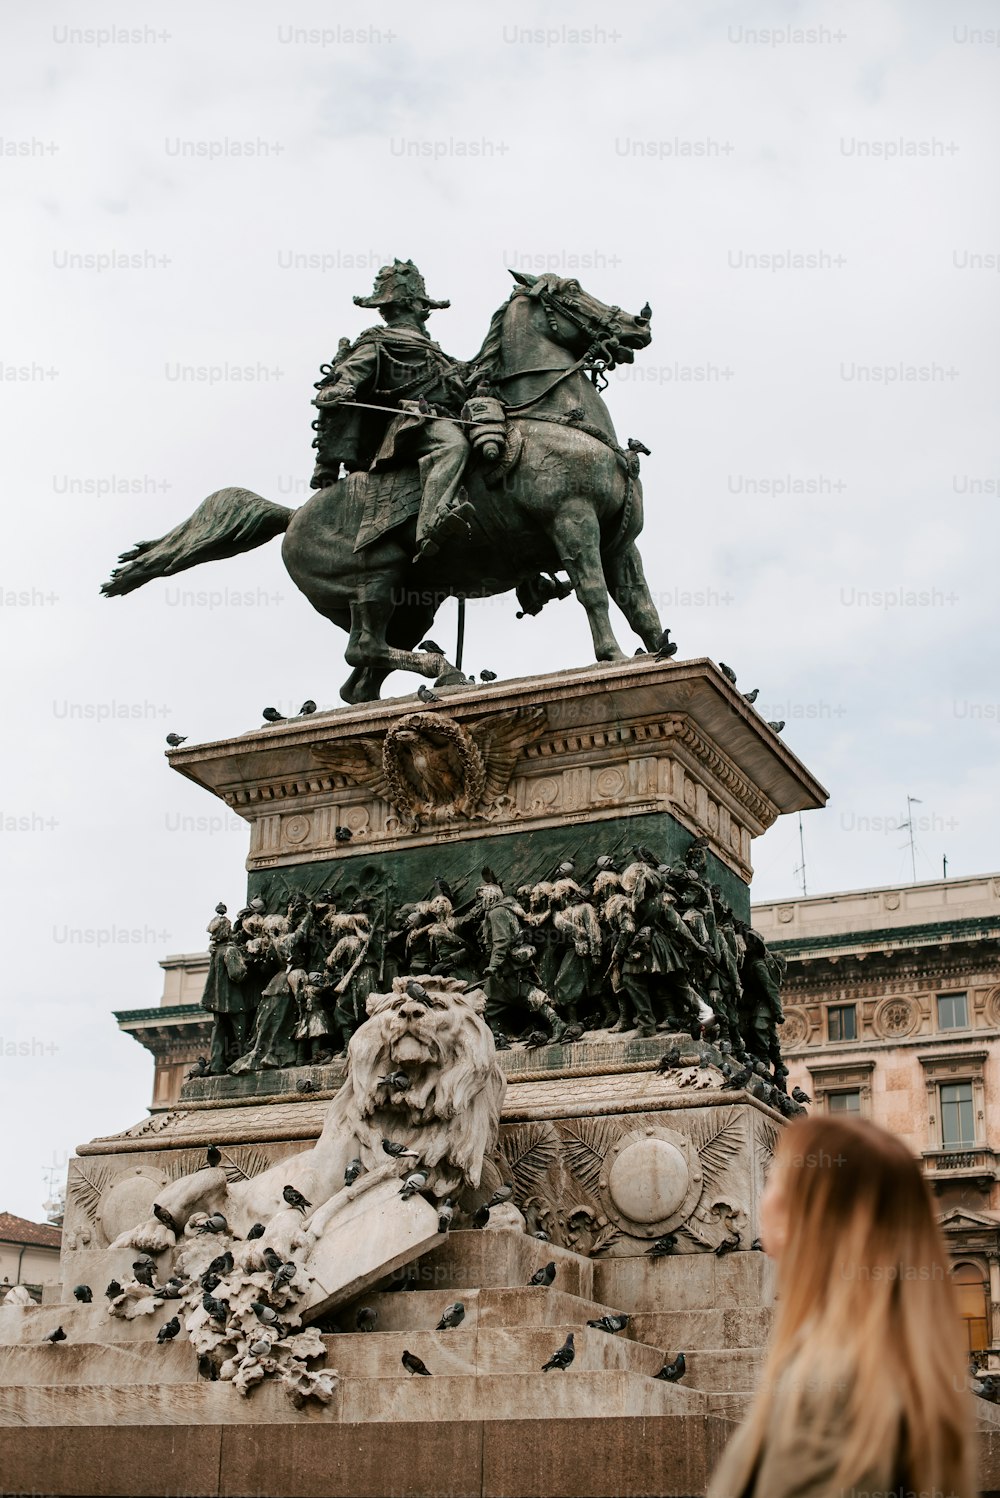 Una estatua de un hombre a caballo en un pedestal